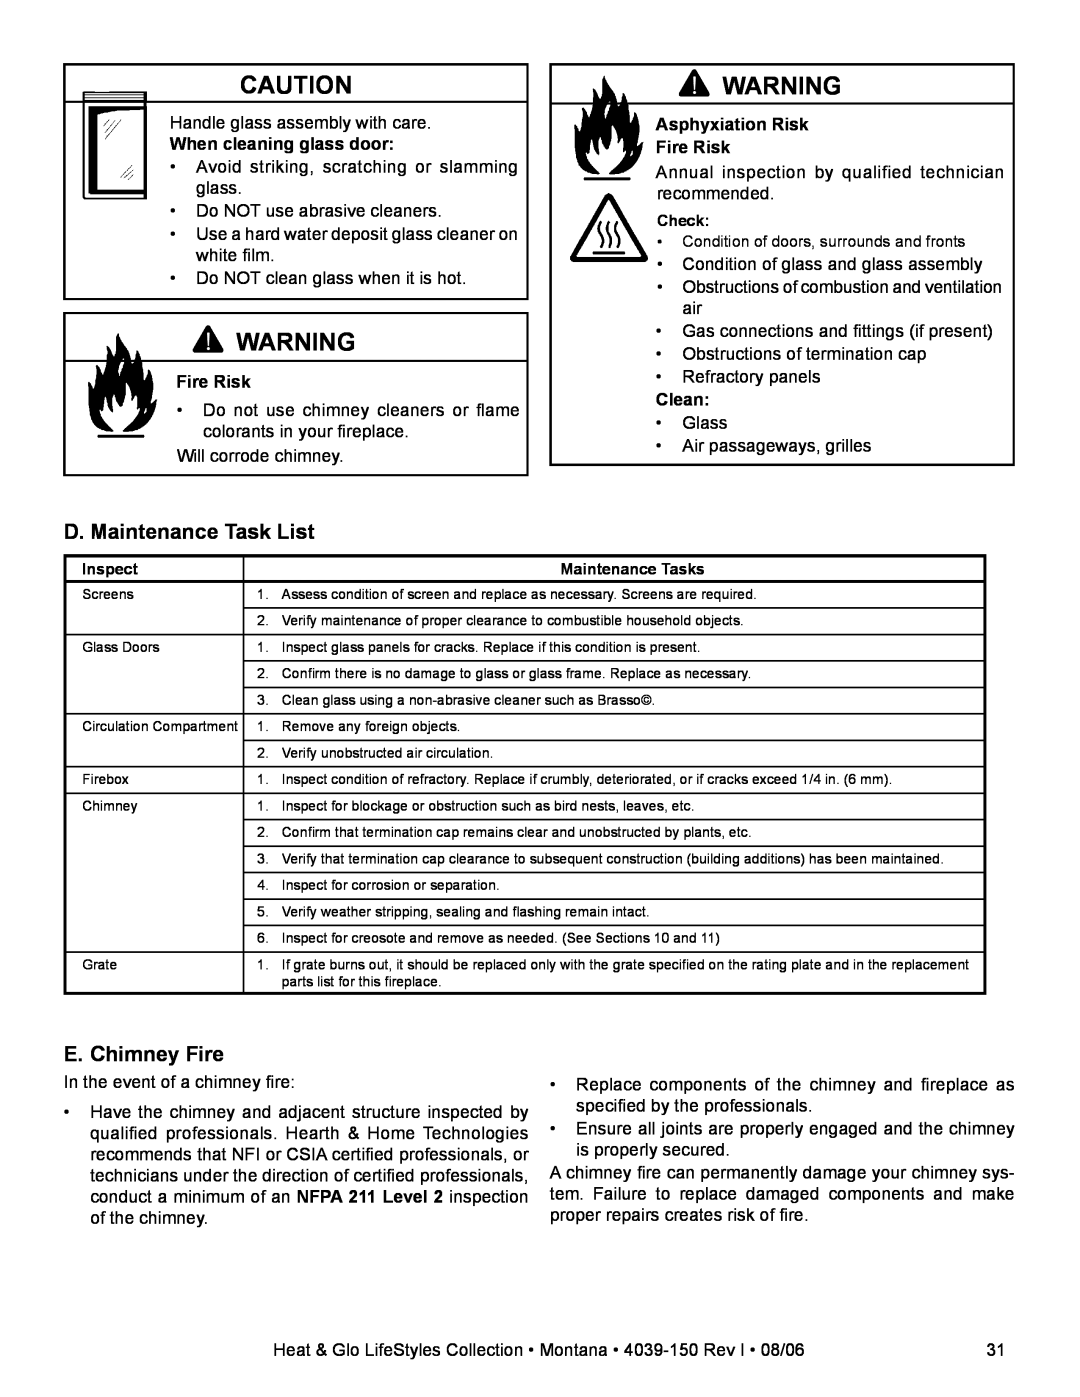 Heat & Glo LifeStyle Montana-36 D. Maintenance Task List, E. Chimney Fire, When cleaning glass door, Fire Risk, Clean 